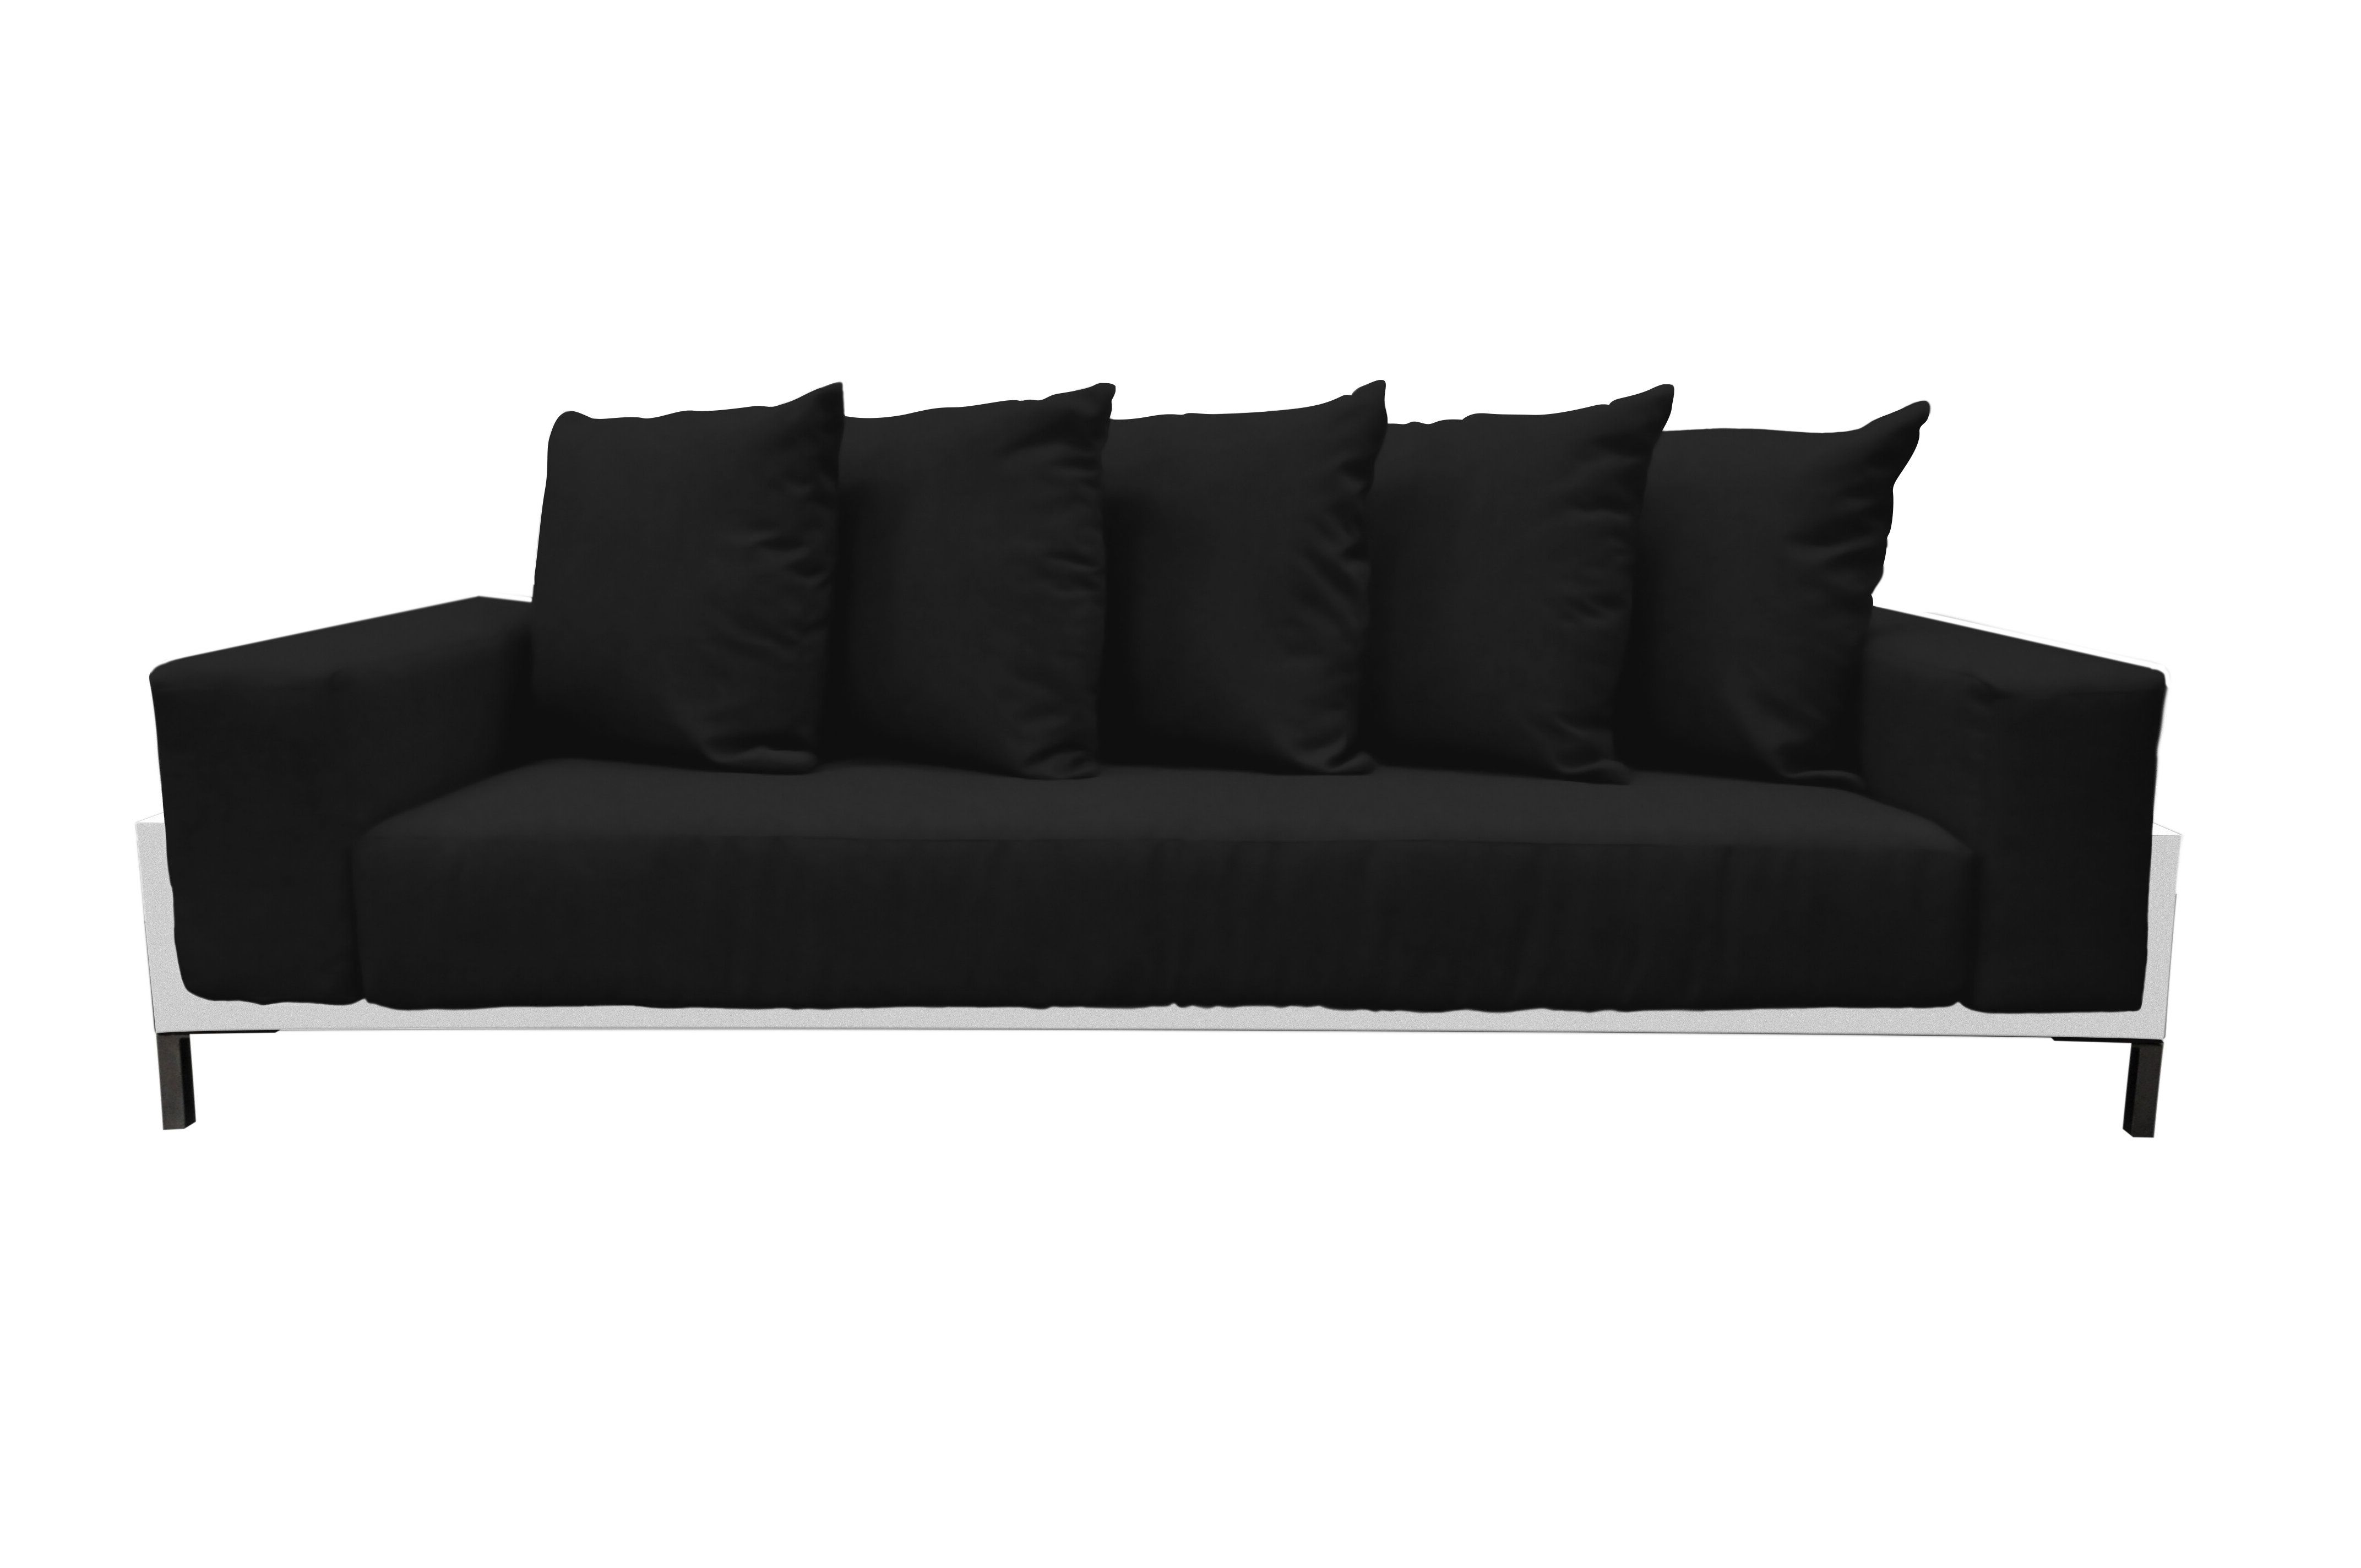 Tilly Deep Seated Patio Sofa With Cushions With Recent Furst Patio Sofas With Cushion (View 14 of 20)